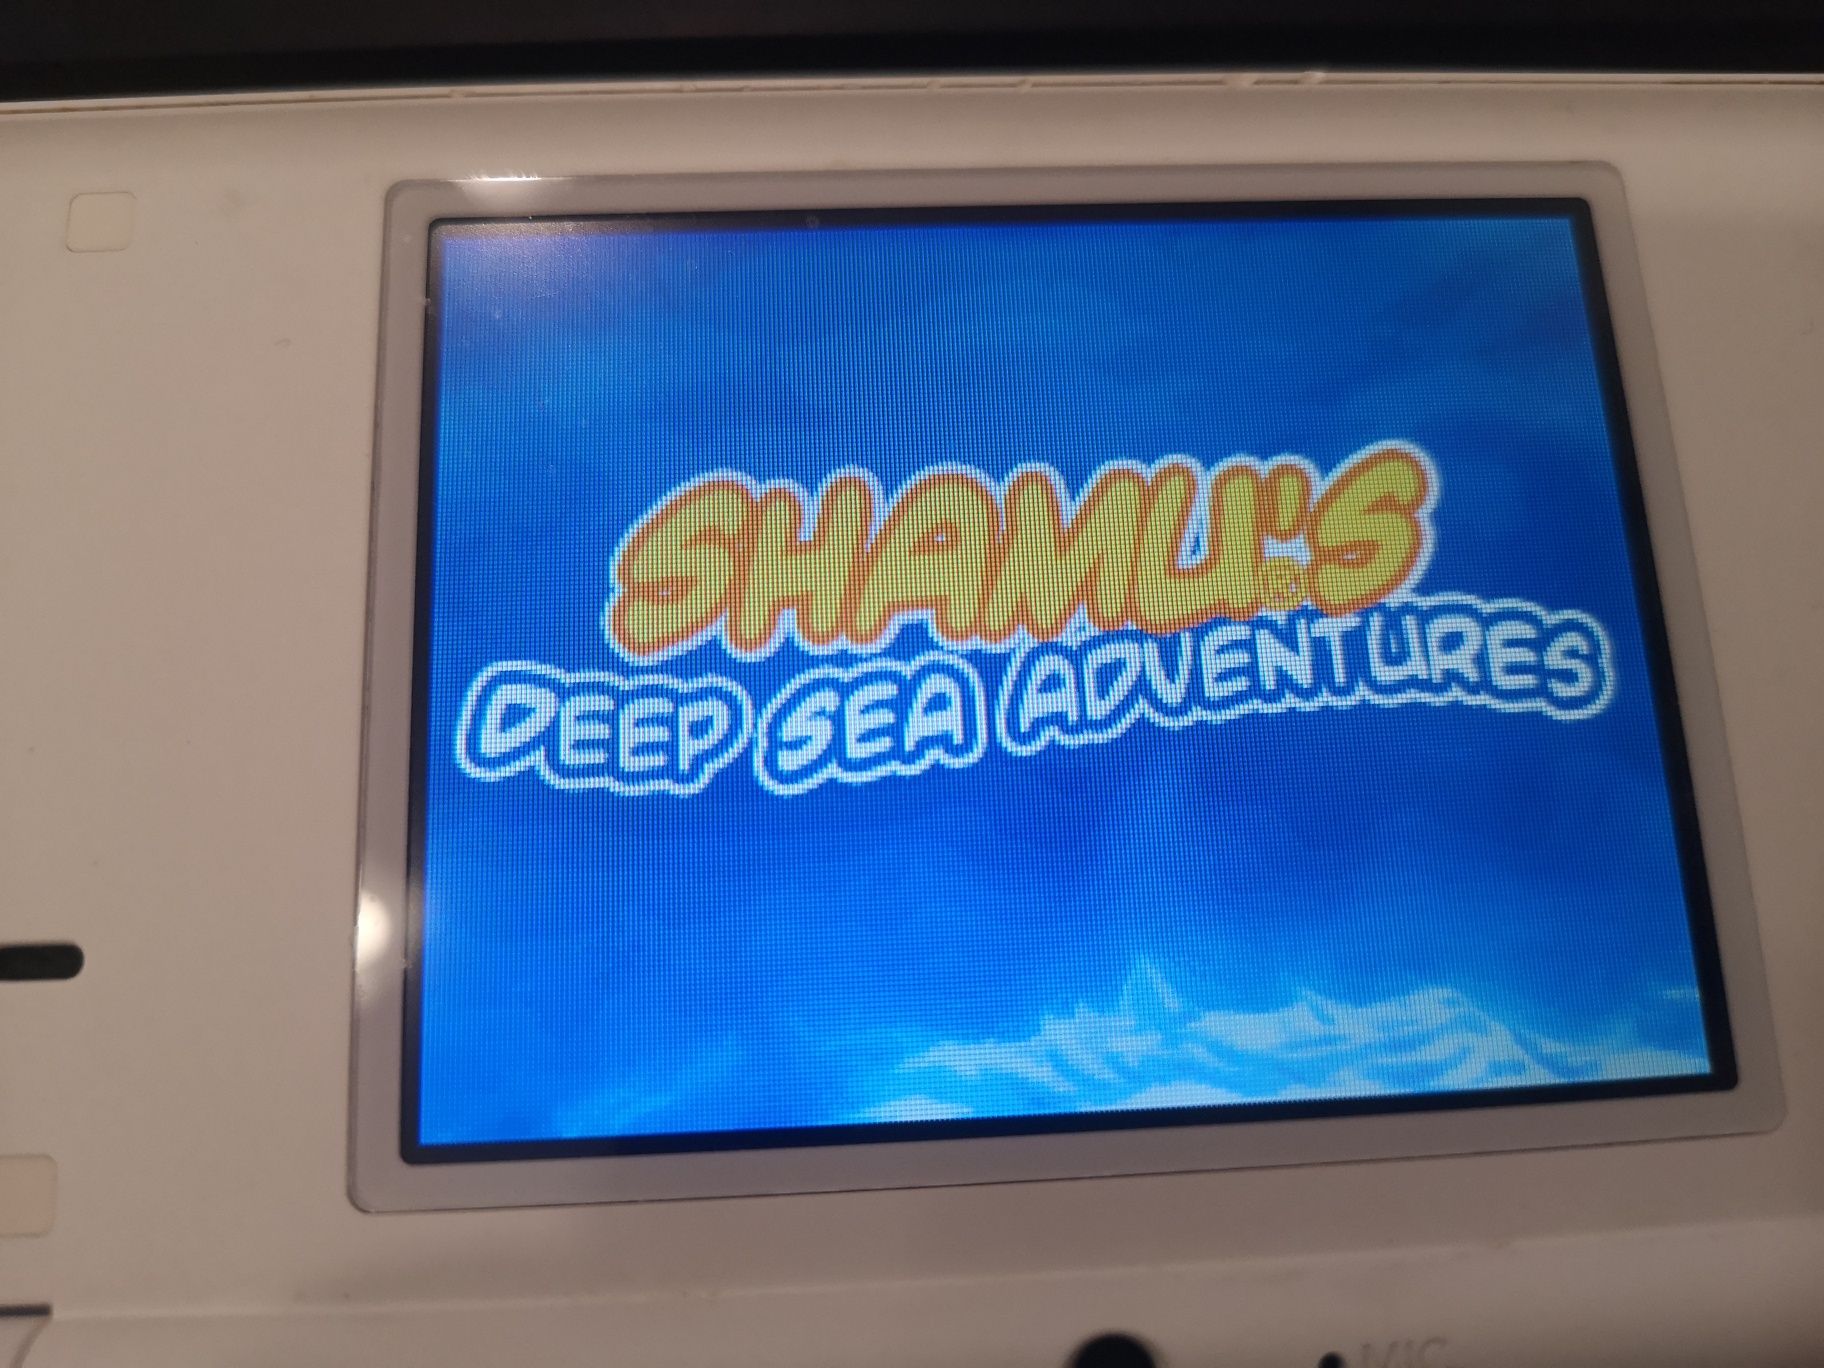 Shamus Deep Sea Adventure NINTENDO DS  (wyd. amerykańskie)